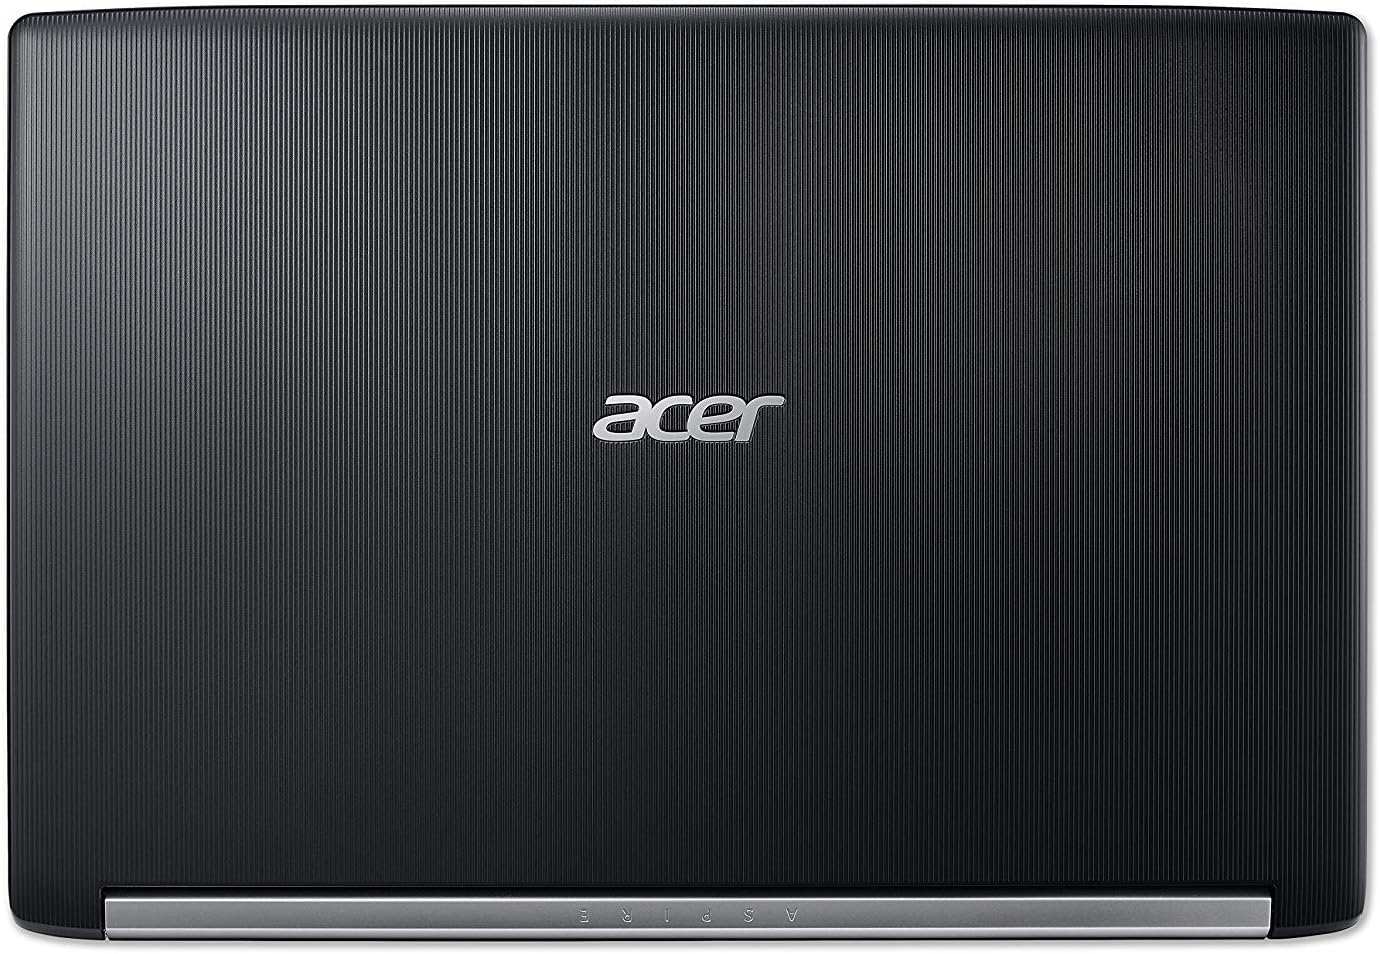 Acer Aspire 5 15.6" Full HD(1920x1080) Display, 7th Gen Intel Core i3-7100U, 8GB DDR4 SDRAM, 1TB HDD, Windows 10 Home 64-Bit, A515-51-3509